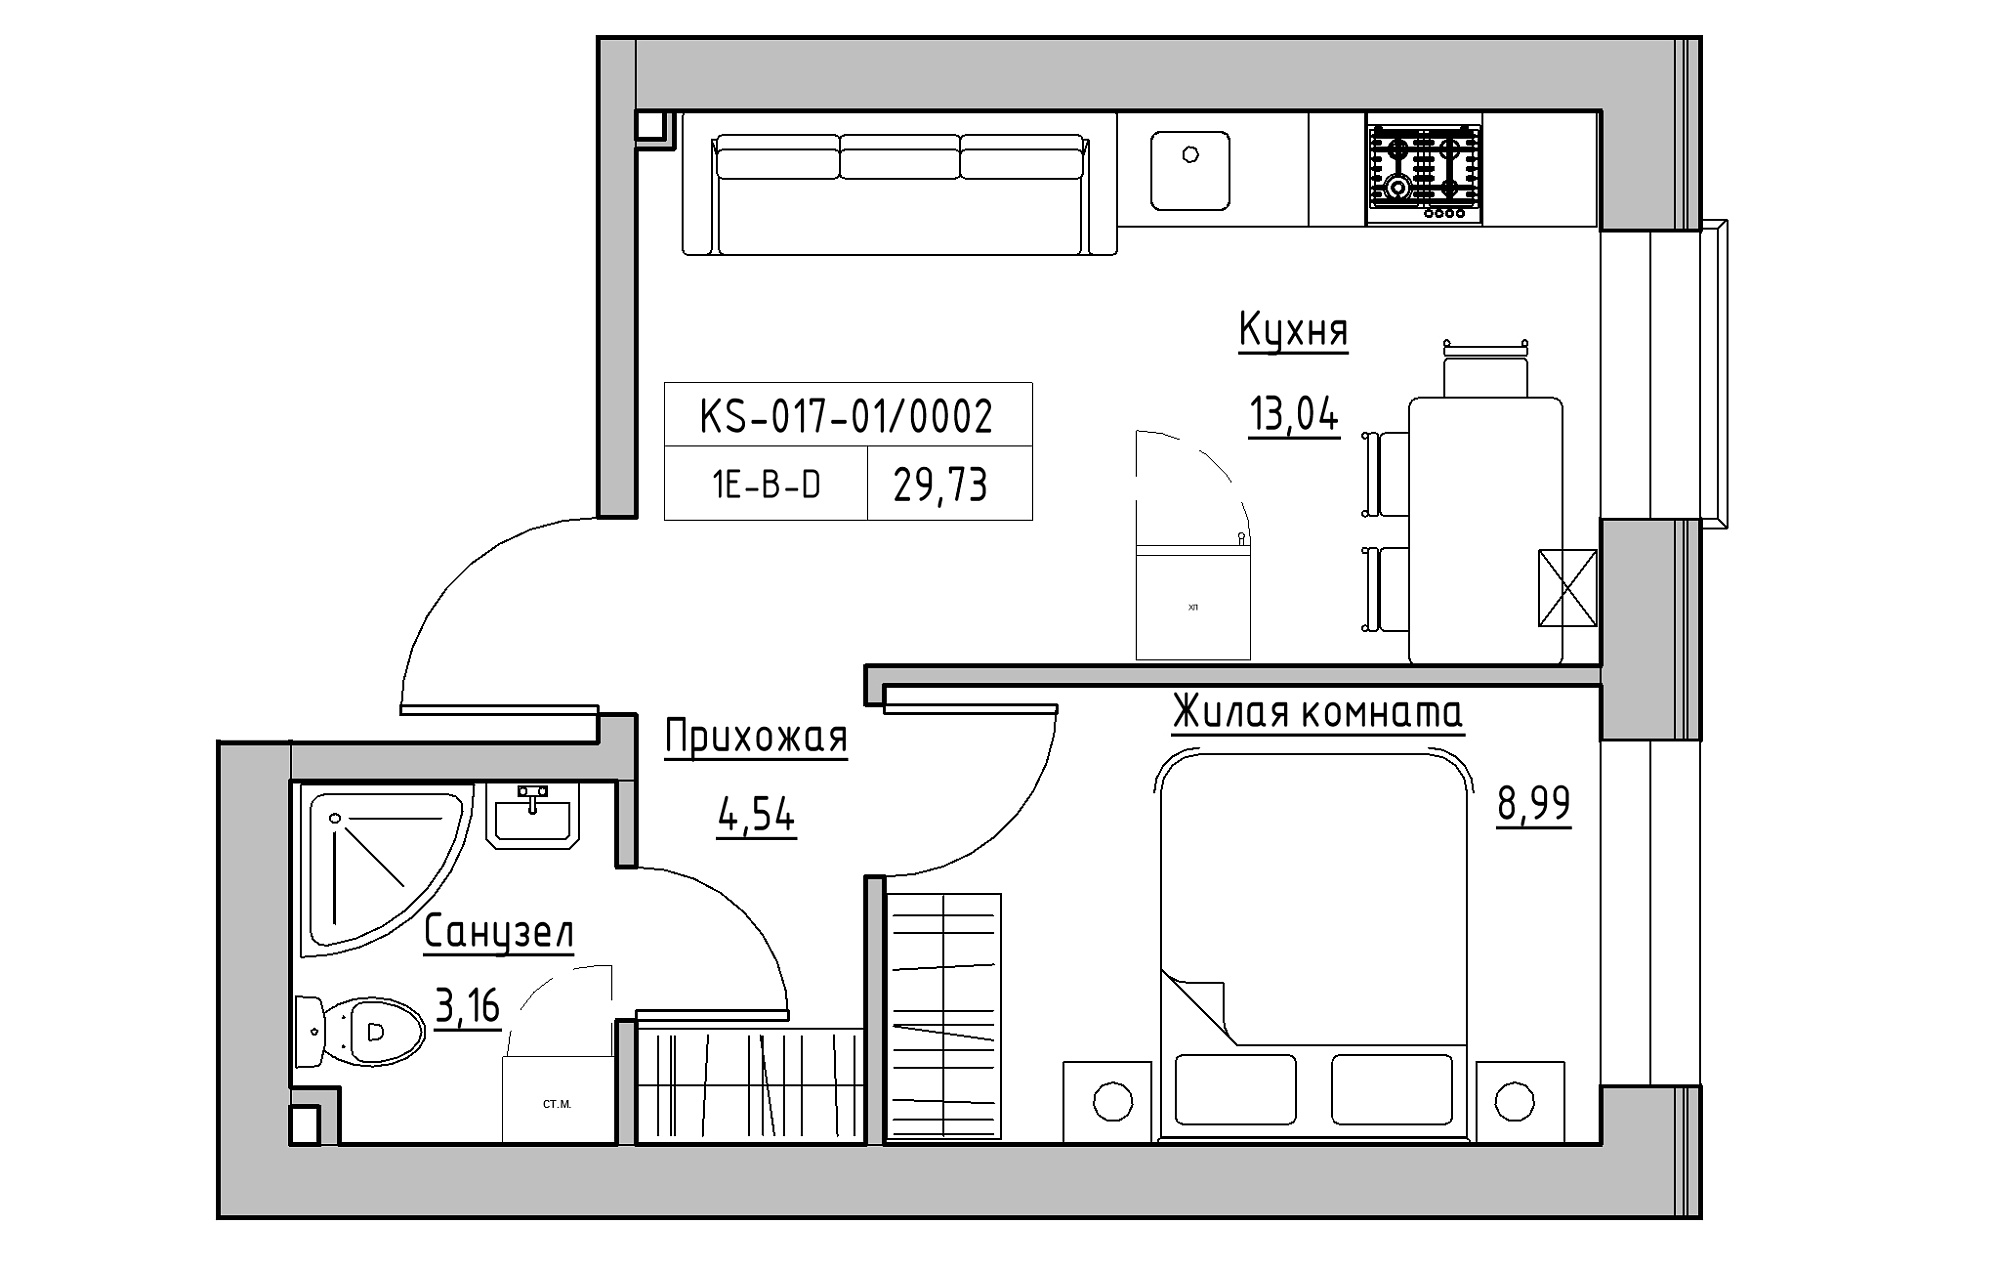 Planning 1-rm flats area 29.73m2, KS-017-01/0002.